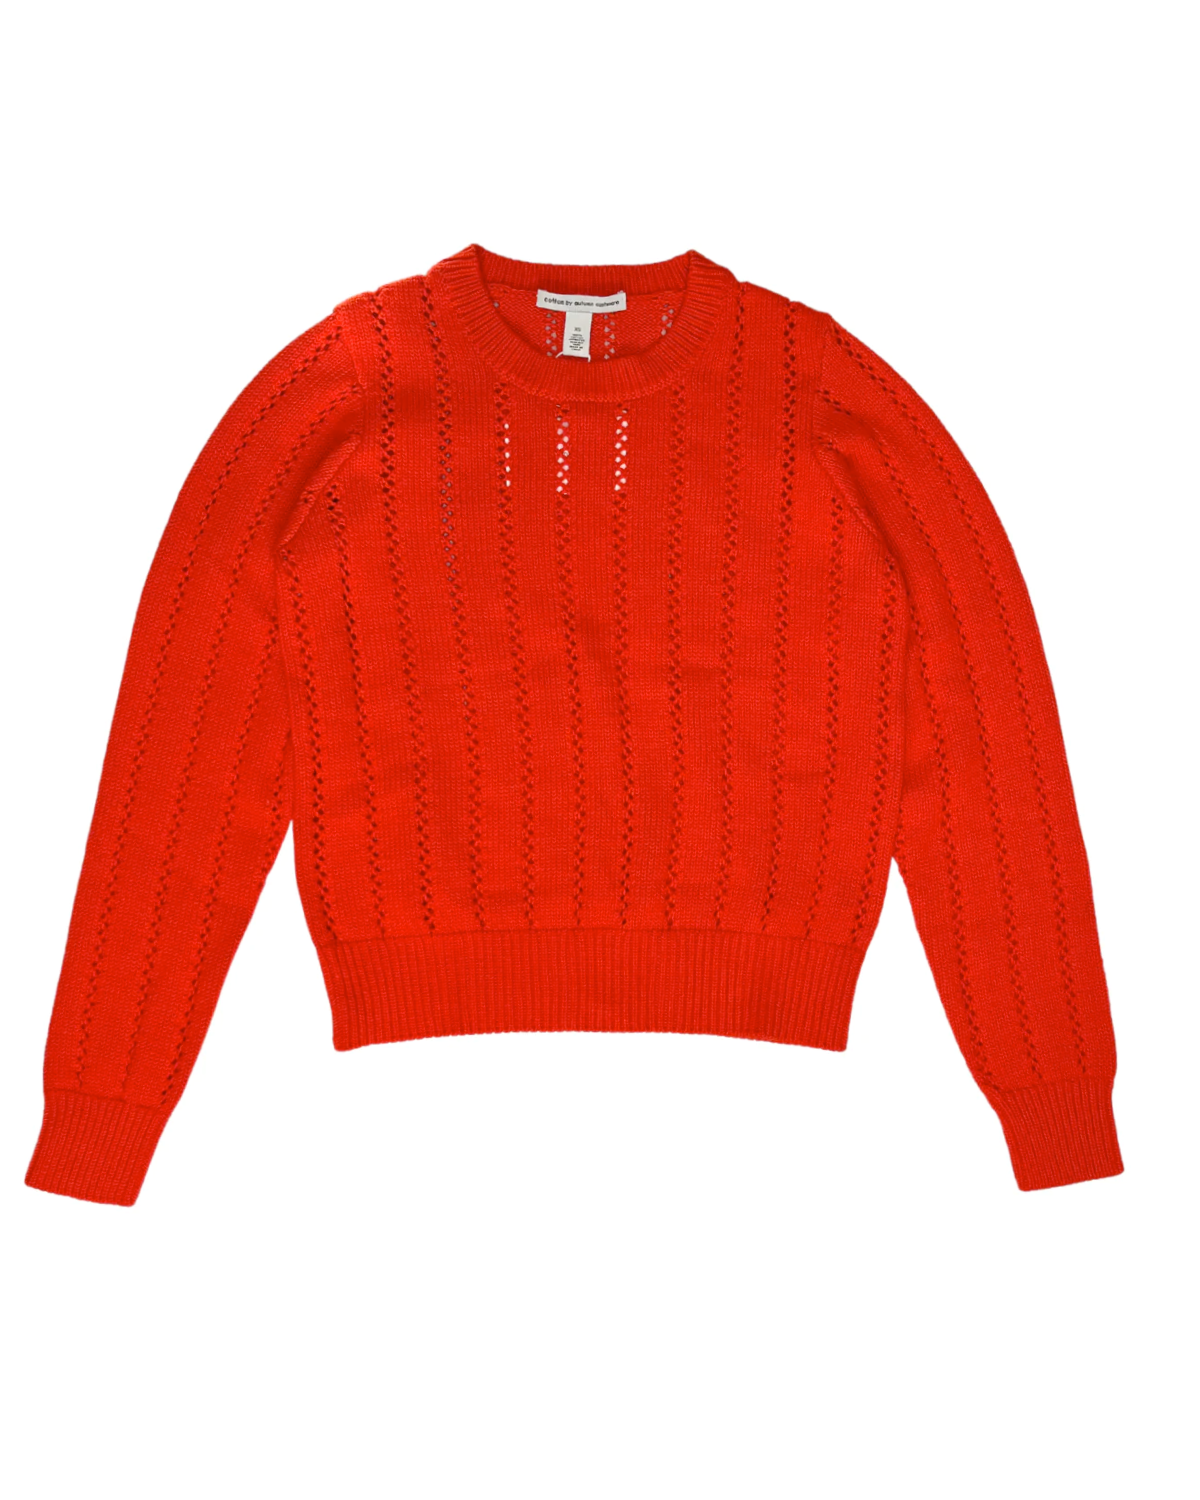 Pointelle Crewneck Sweater (Flame)